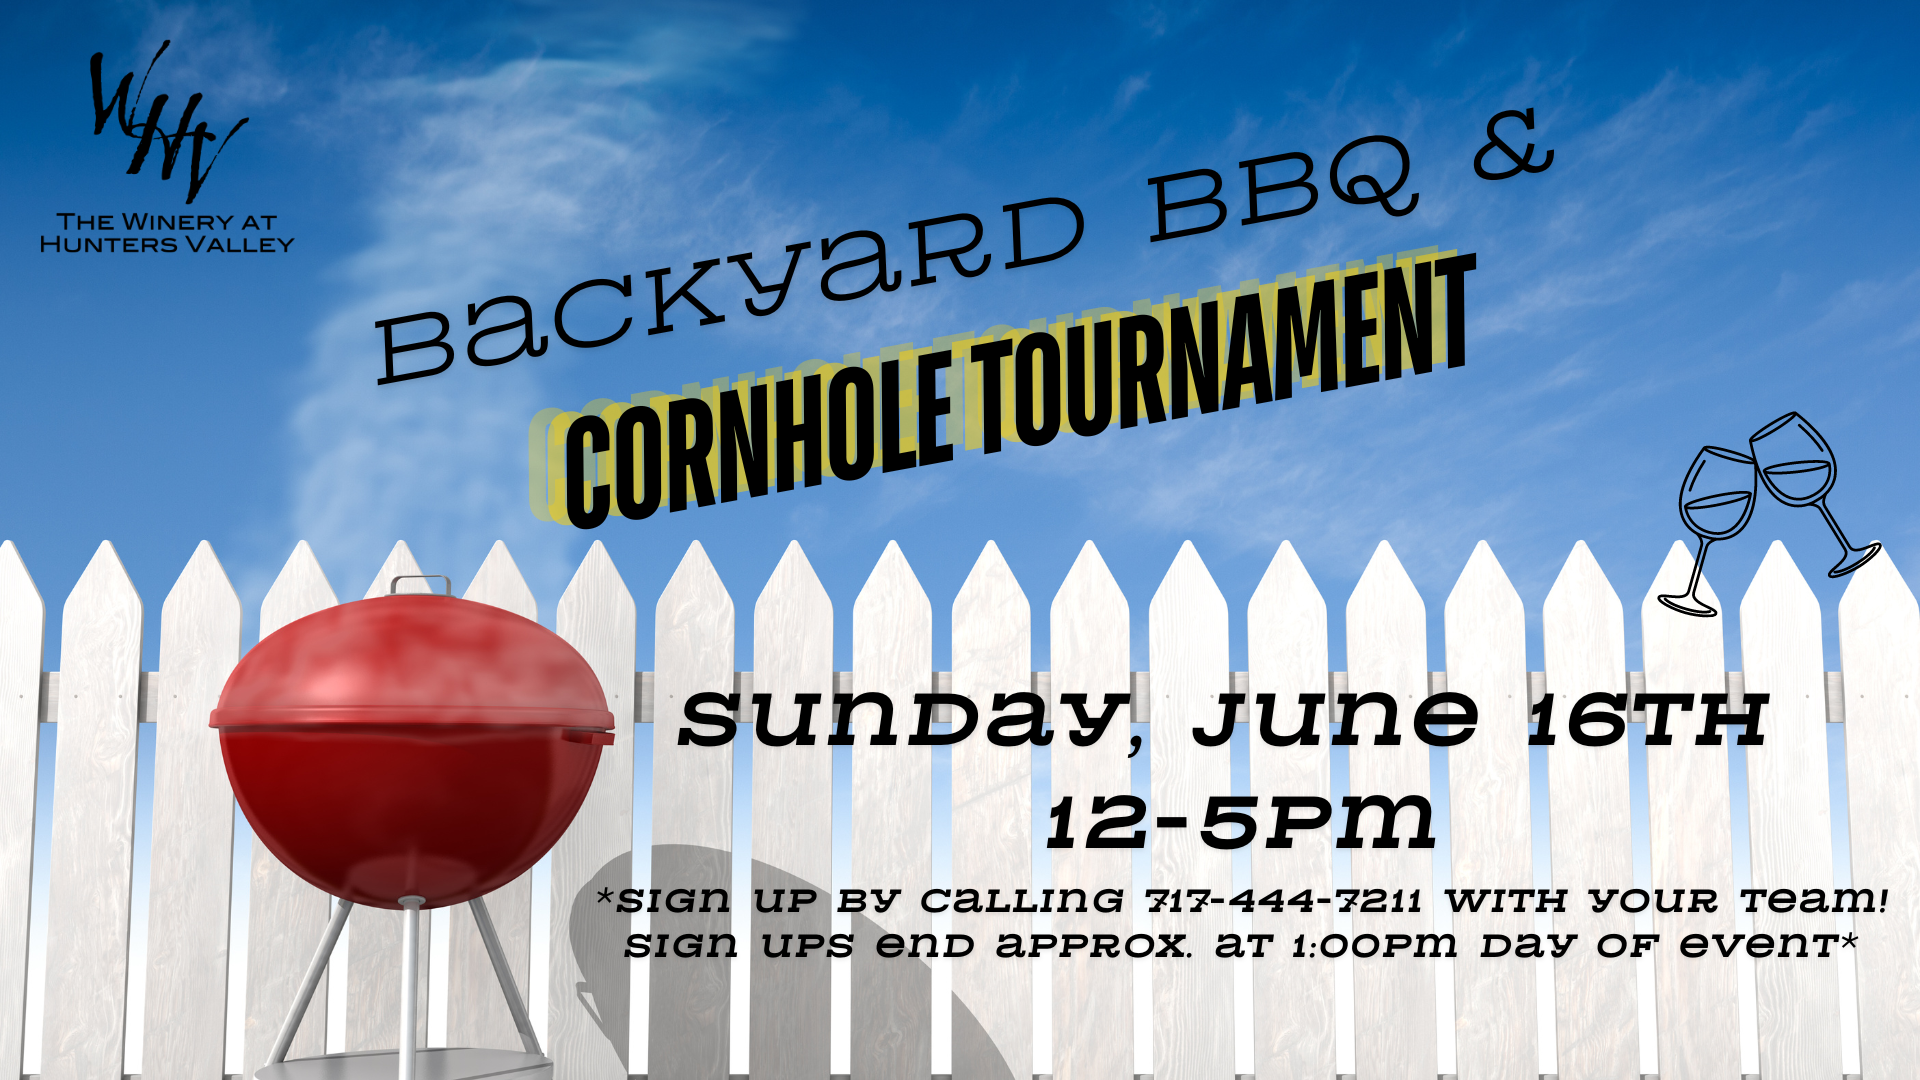 Backyard BBQ & Cornhole Tournament!